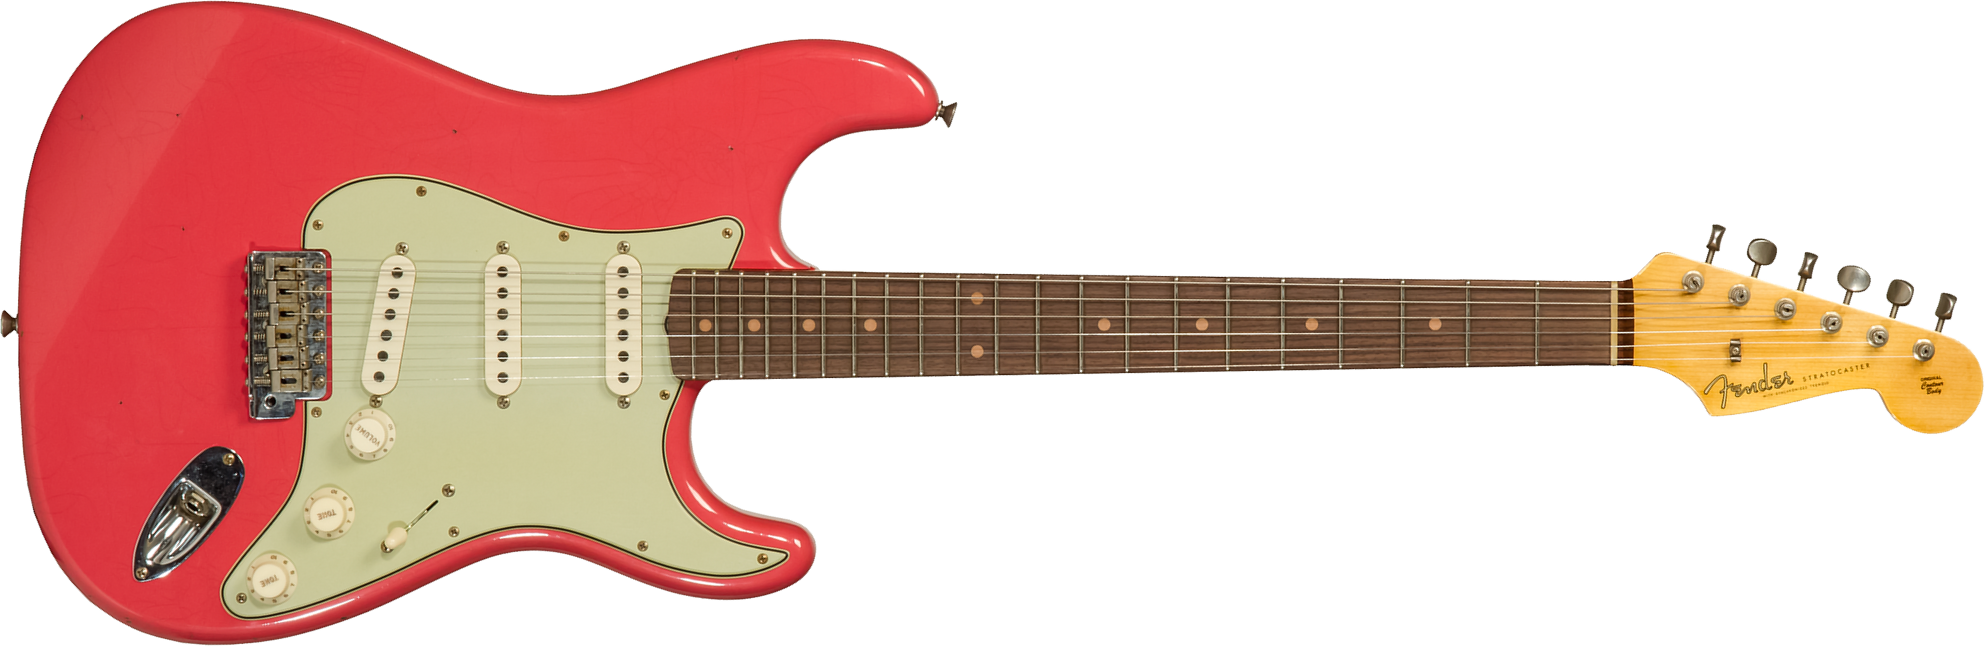 Fender Custom Shop Strat 1959 3s Trem Rw #cz569772 - Journeyman Relic Aged Fiesta Red - E-Gitarre in Str-Form - Main picture